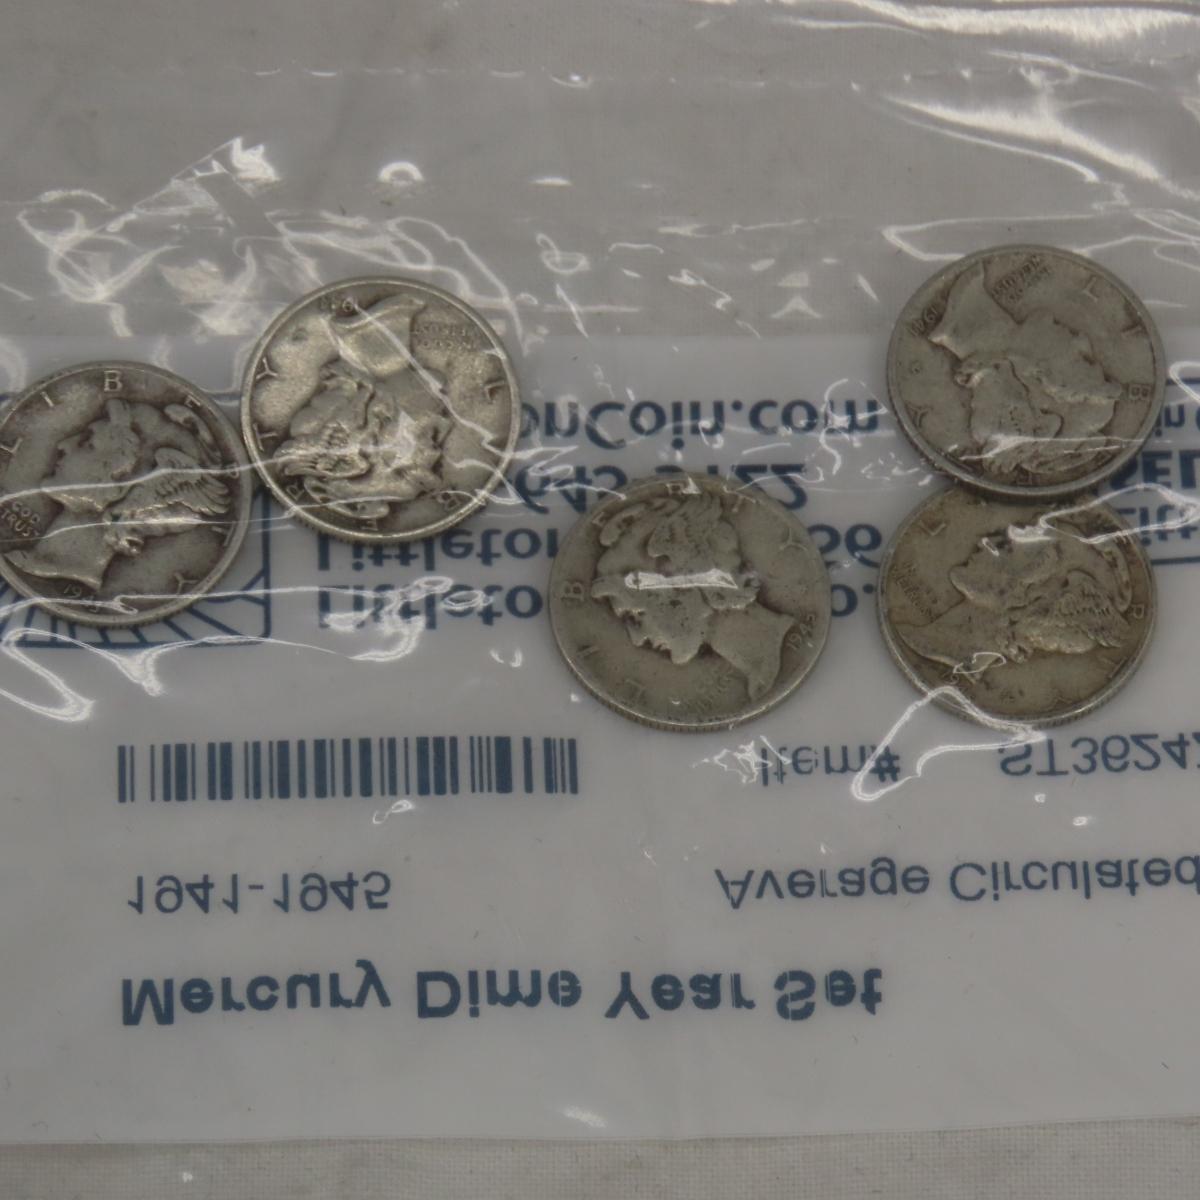 6 1941-1945 Mercury Dime Year Sets Littleton Coin